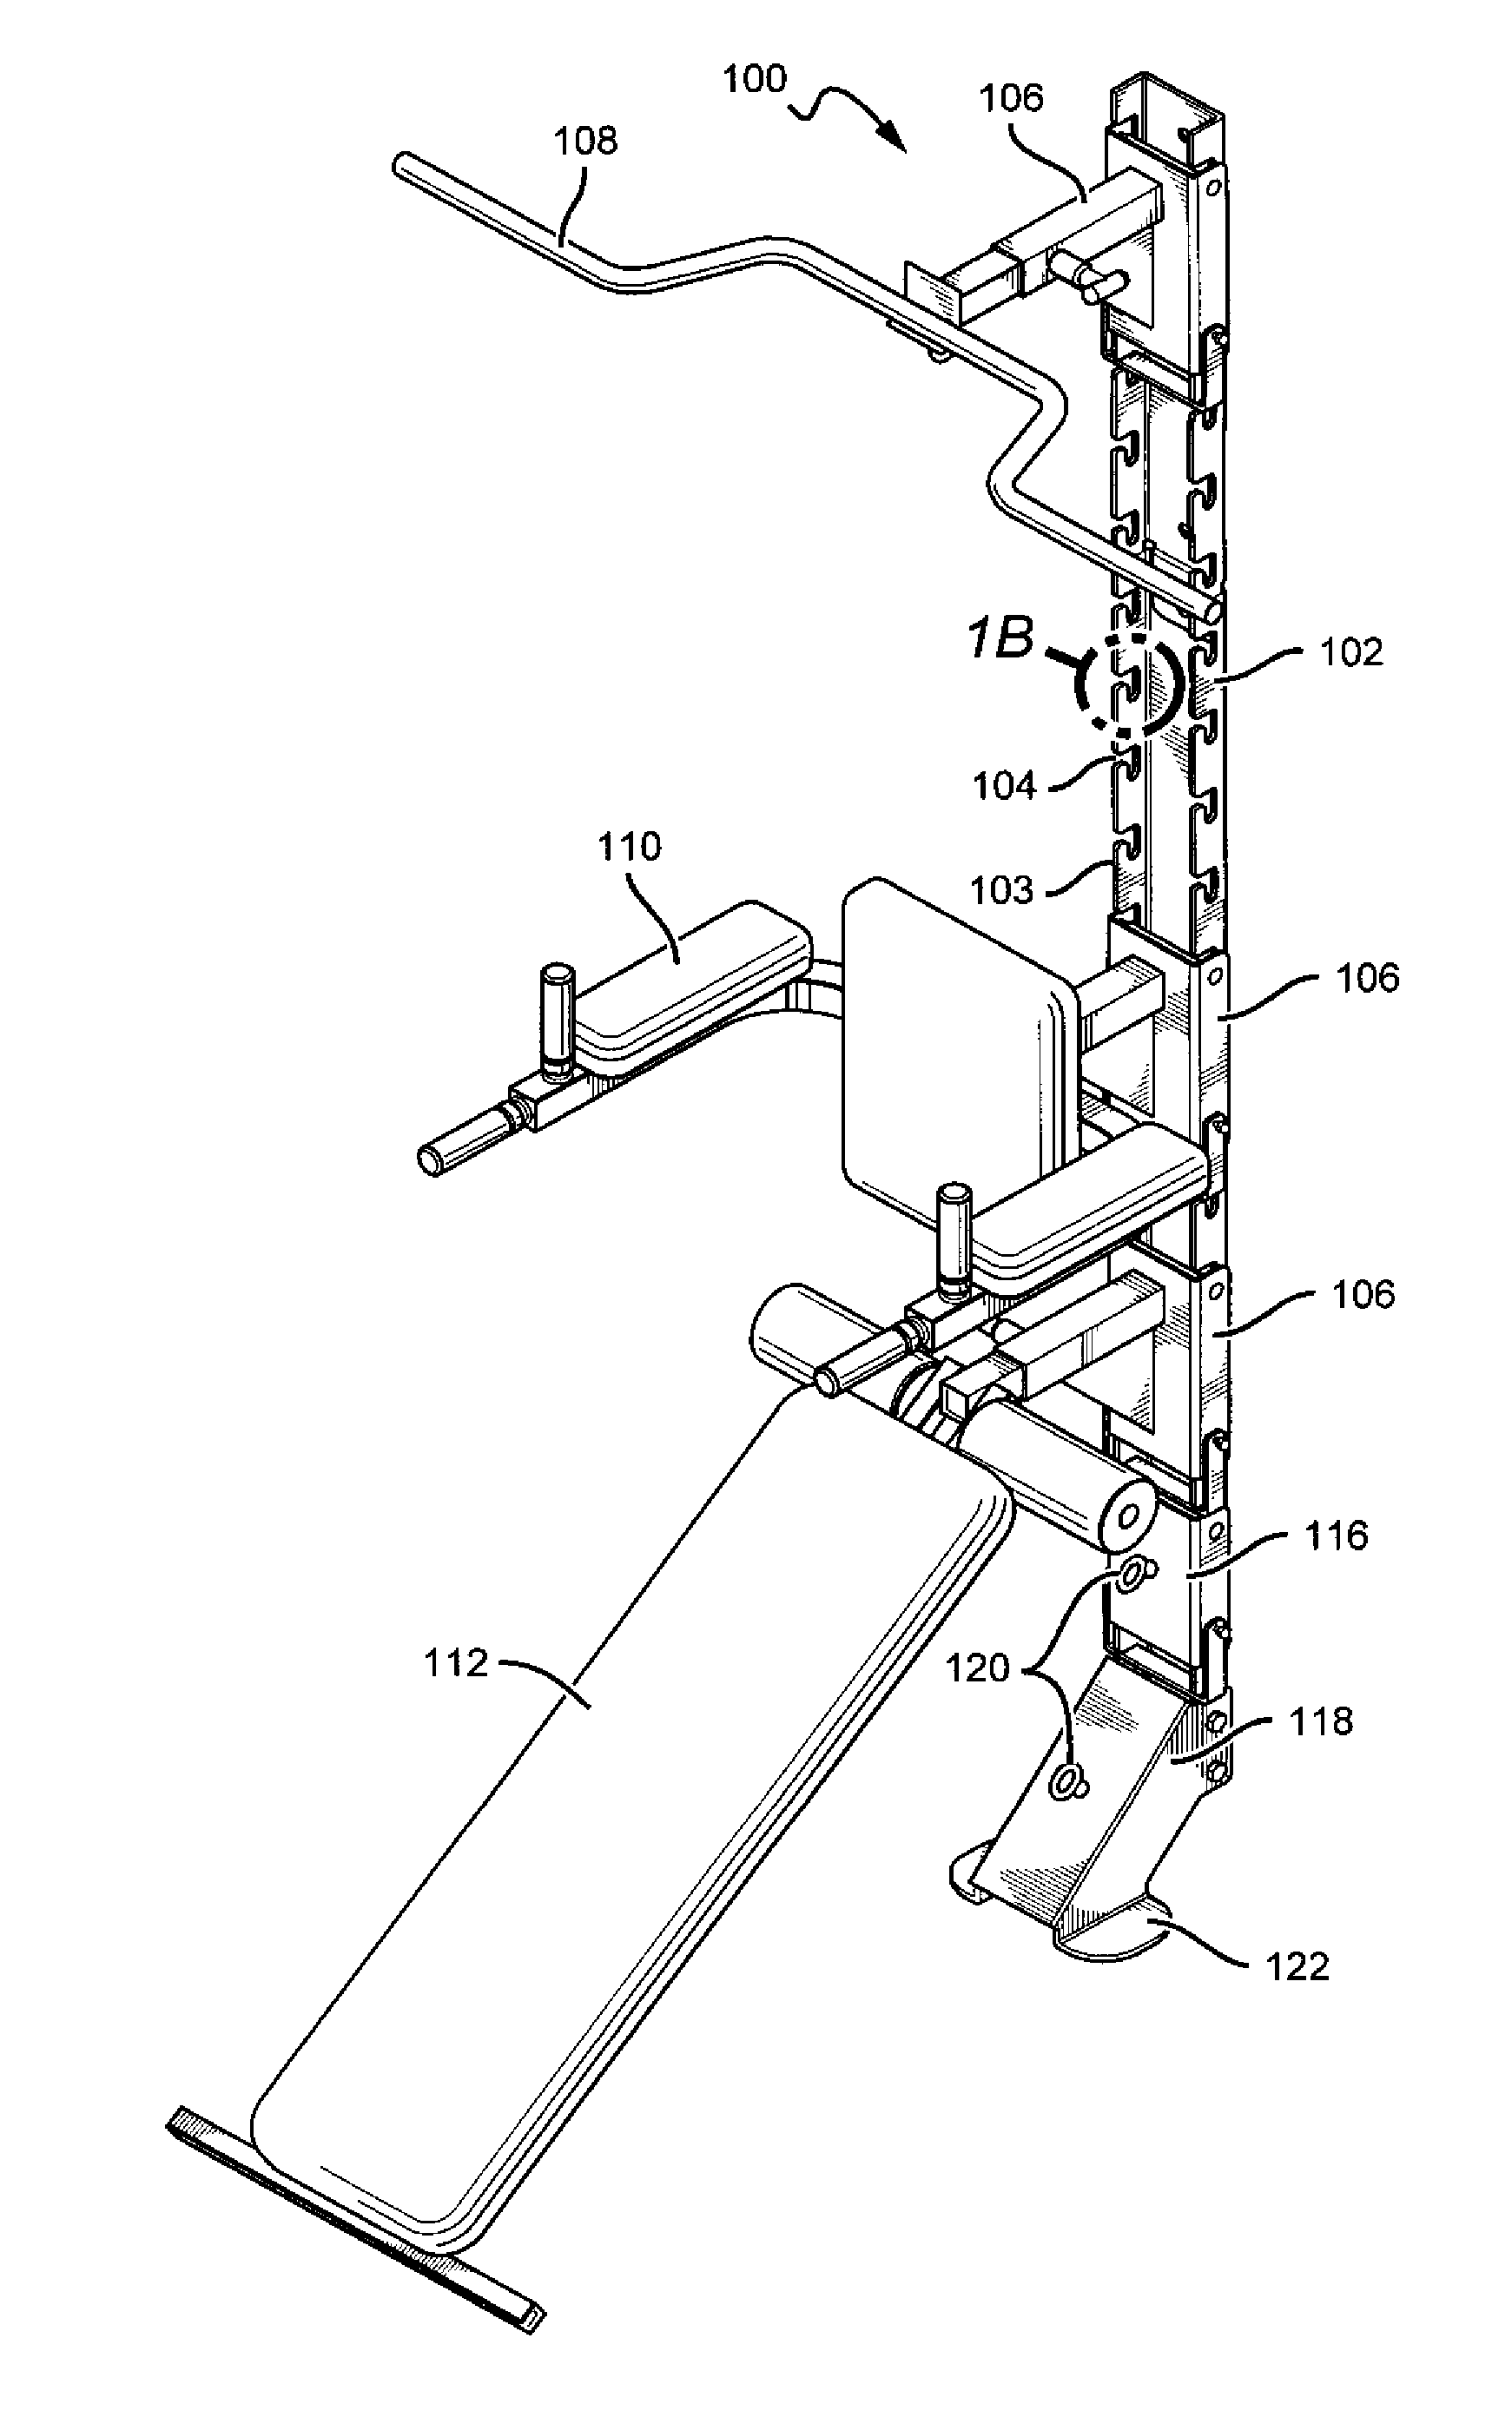 Surface mounted modular exercise device